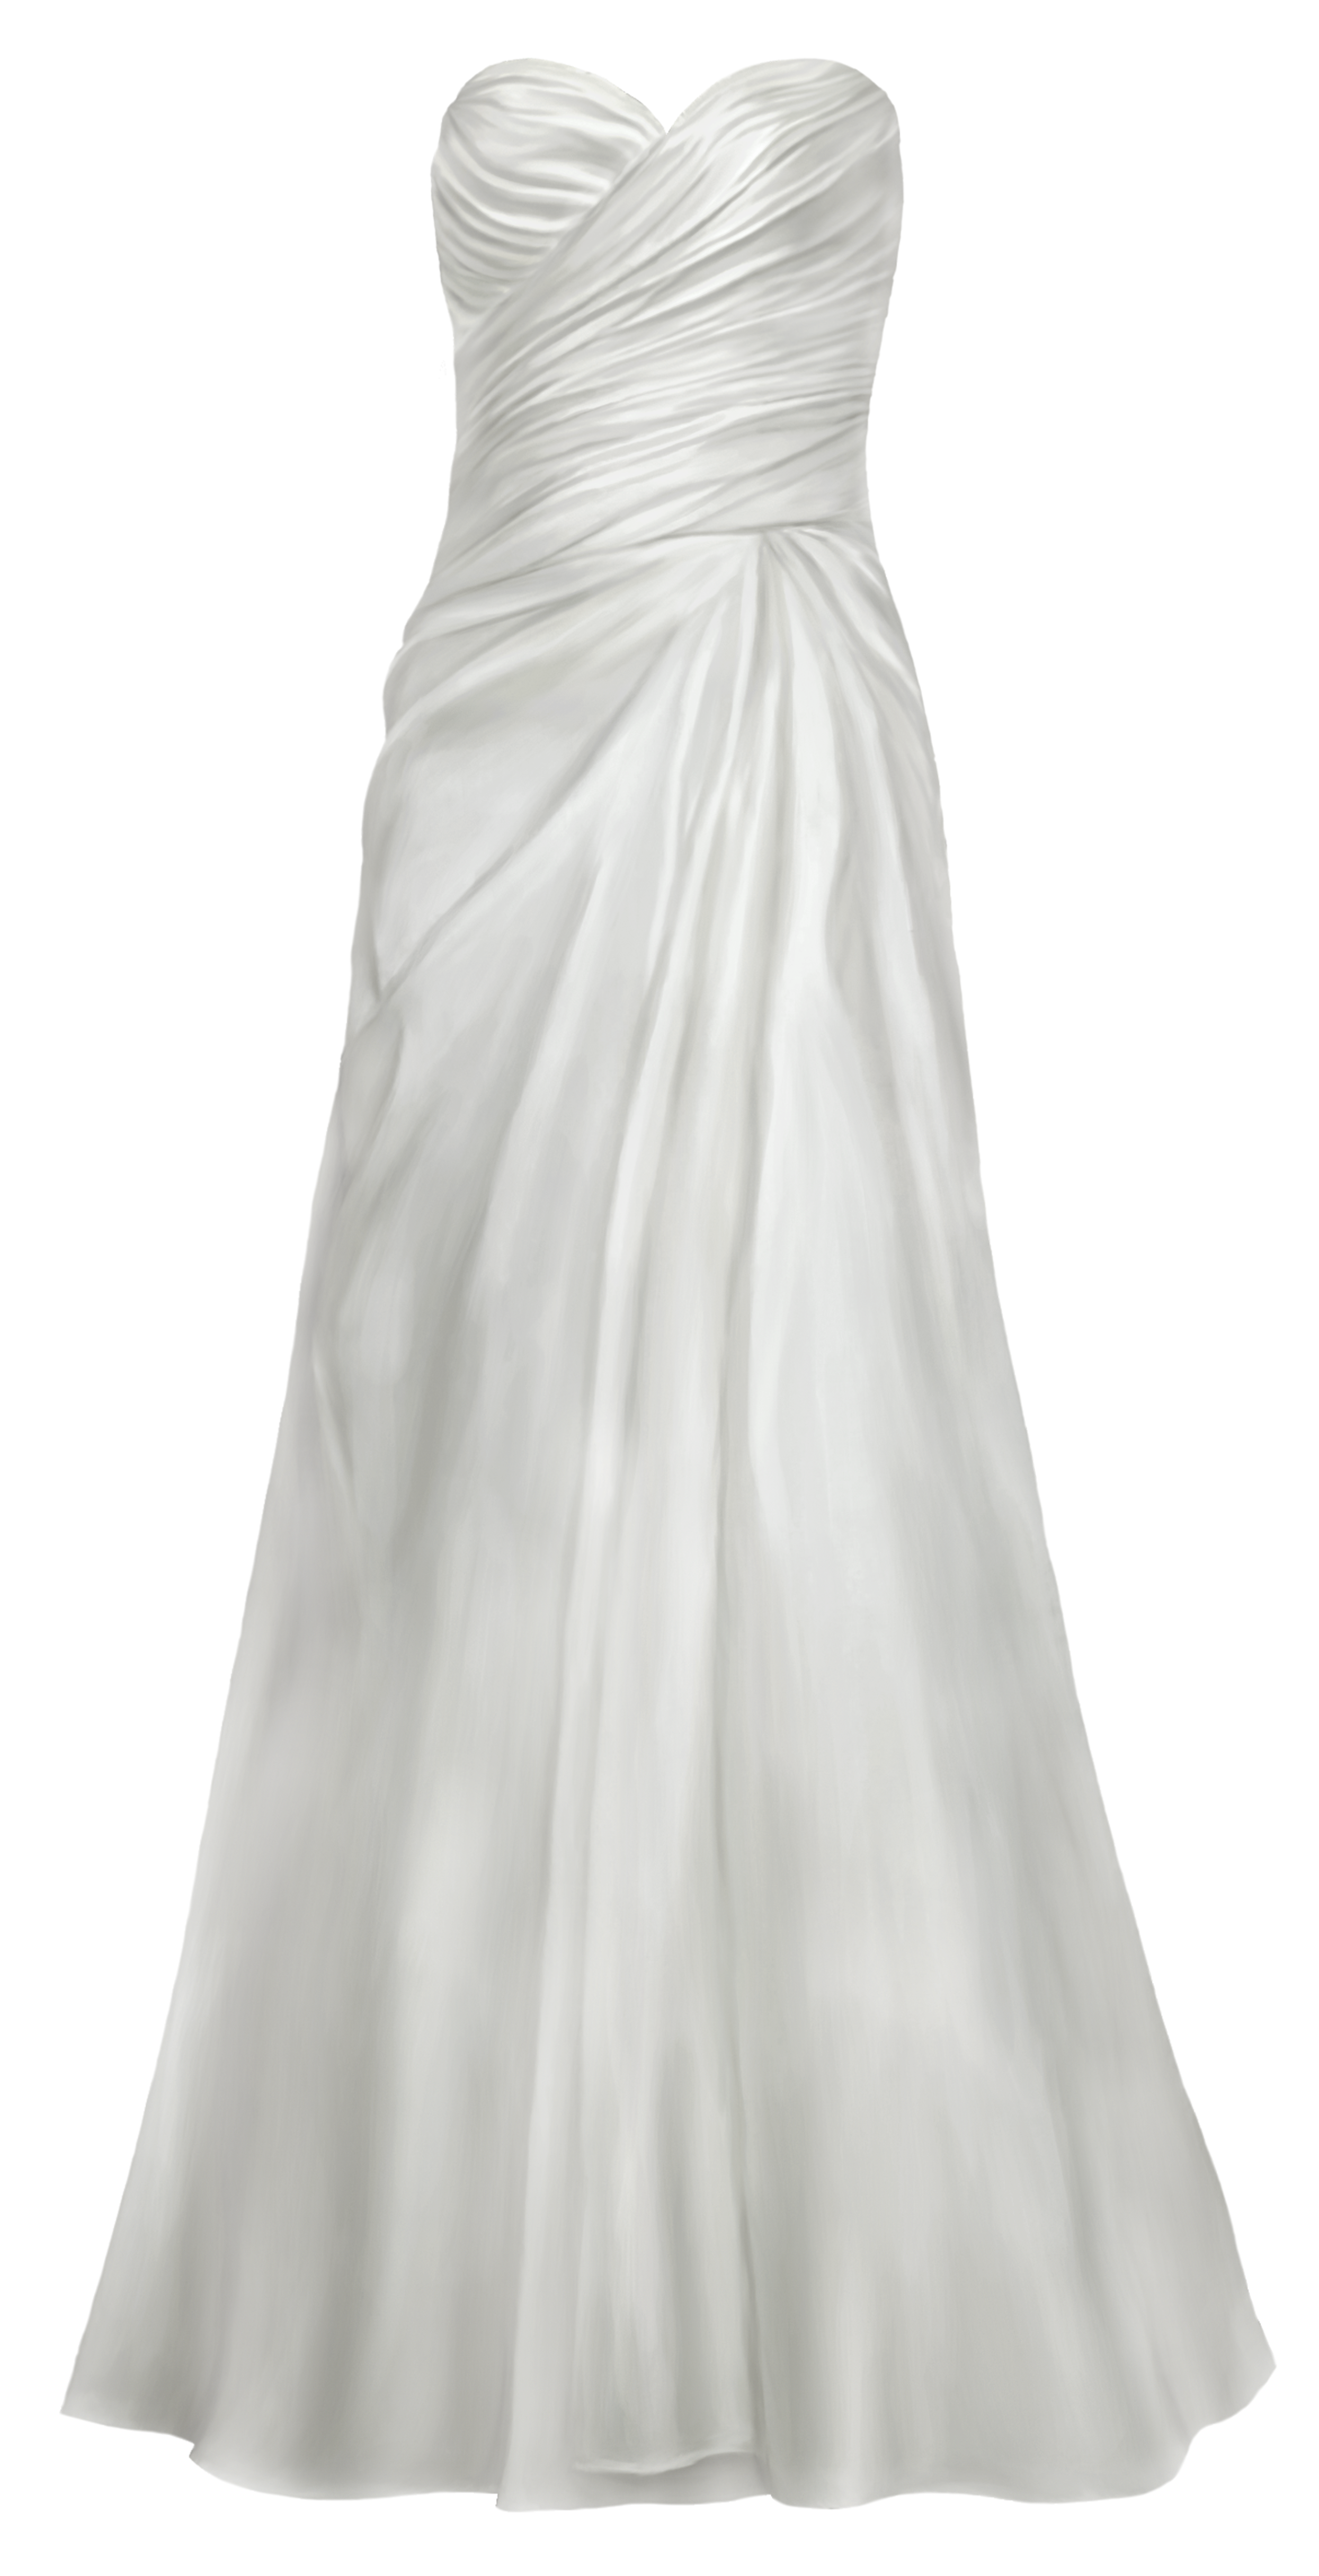 Snowflake clipart dress. Satin wedding png clip